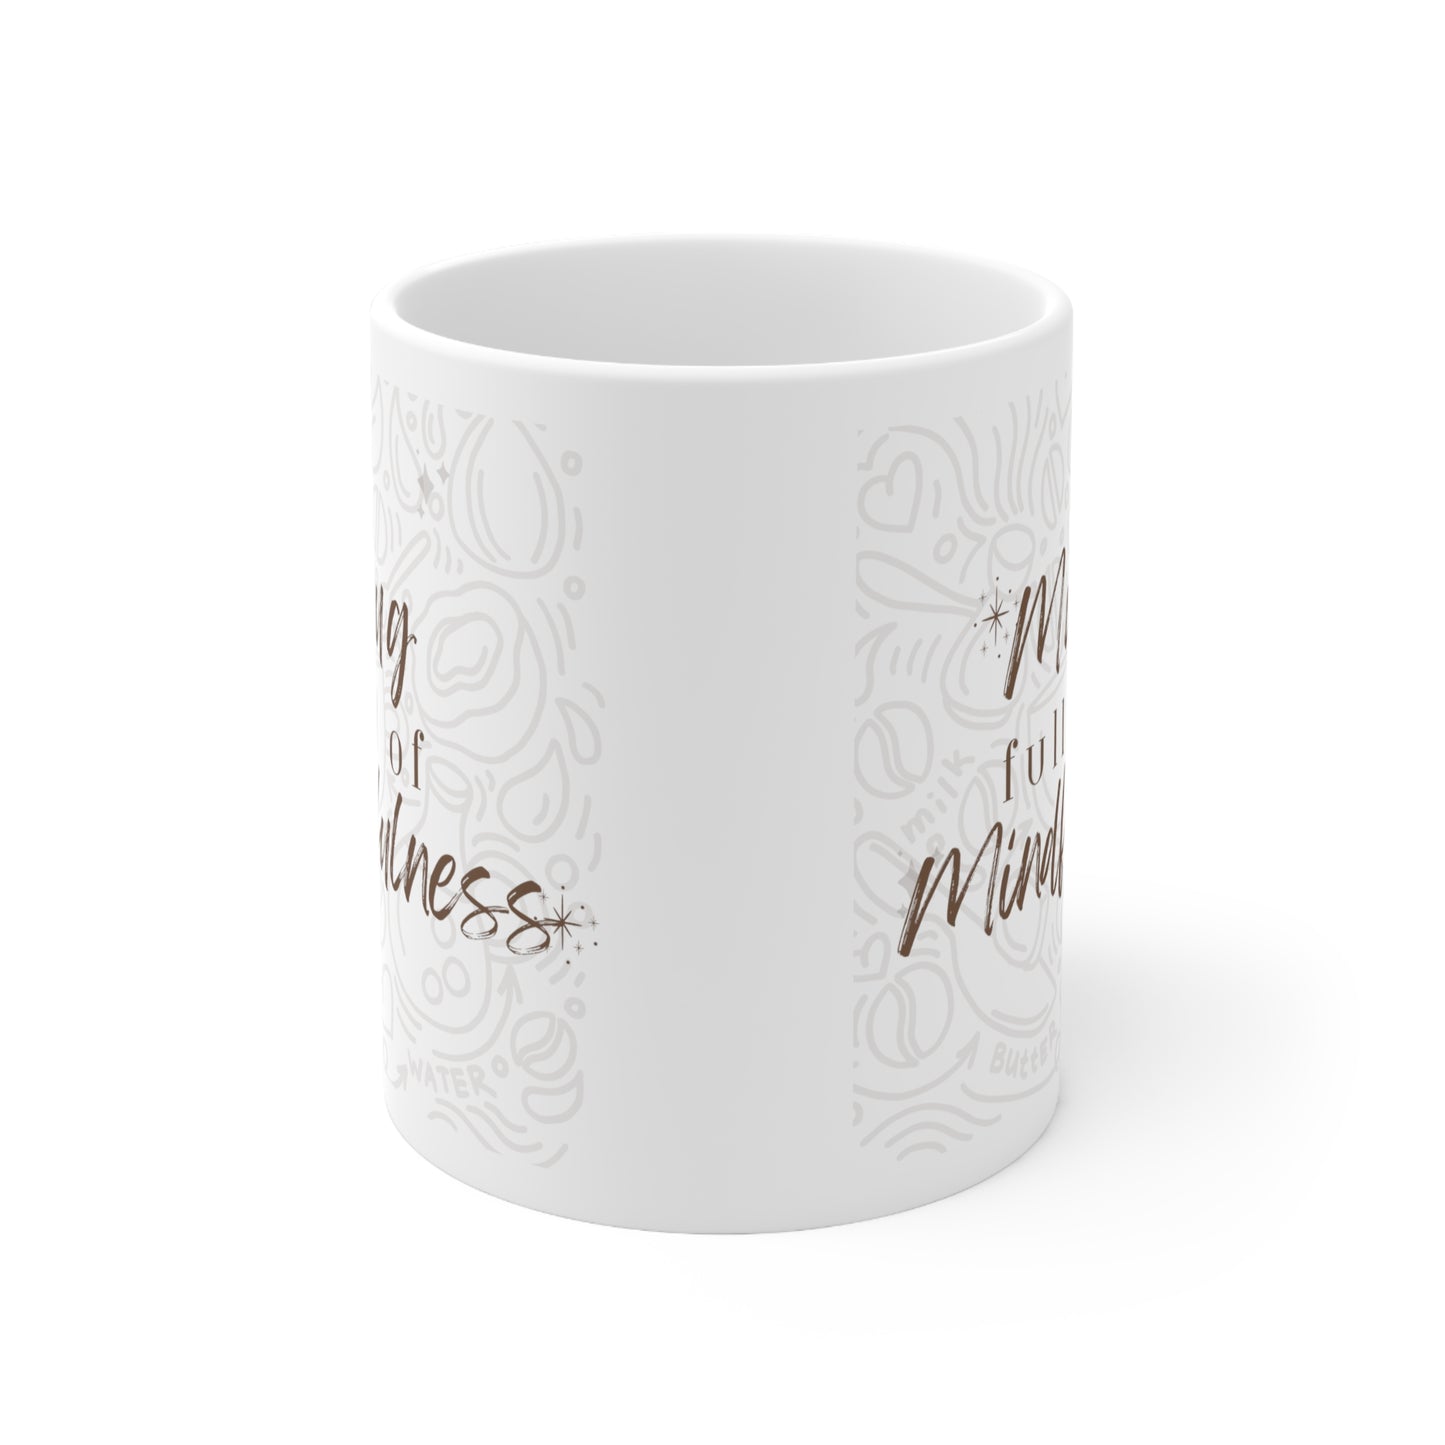 Mug o' Mindfulness Mug